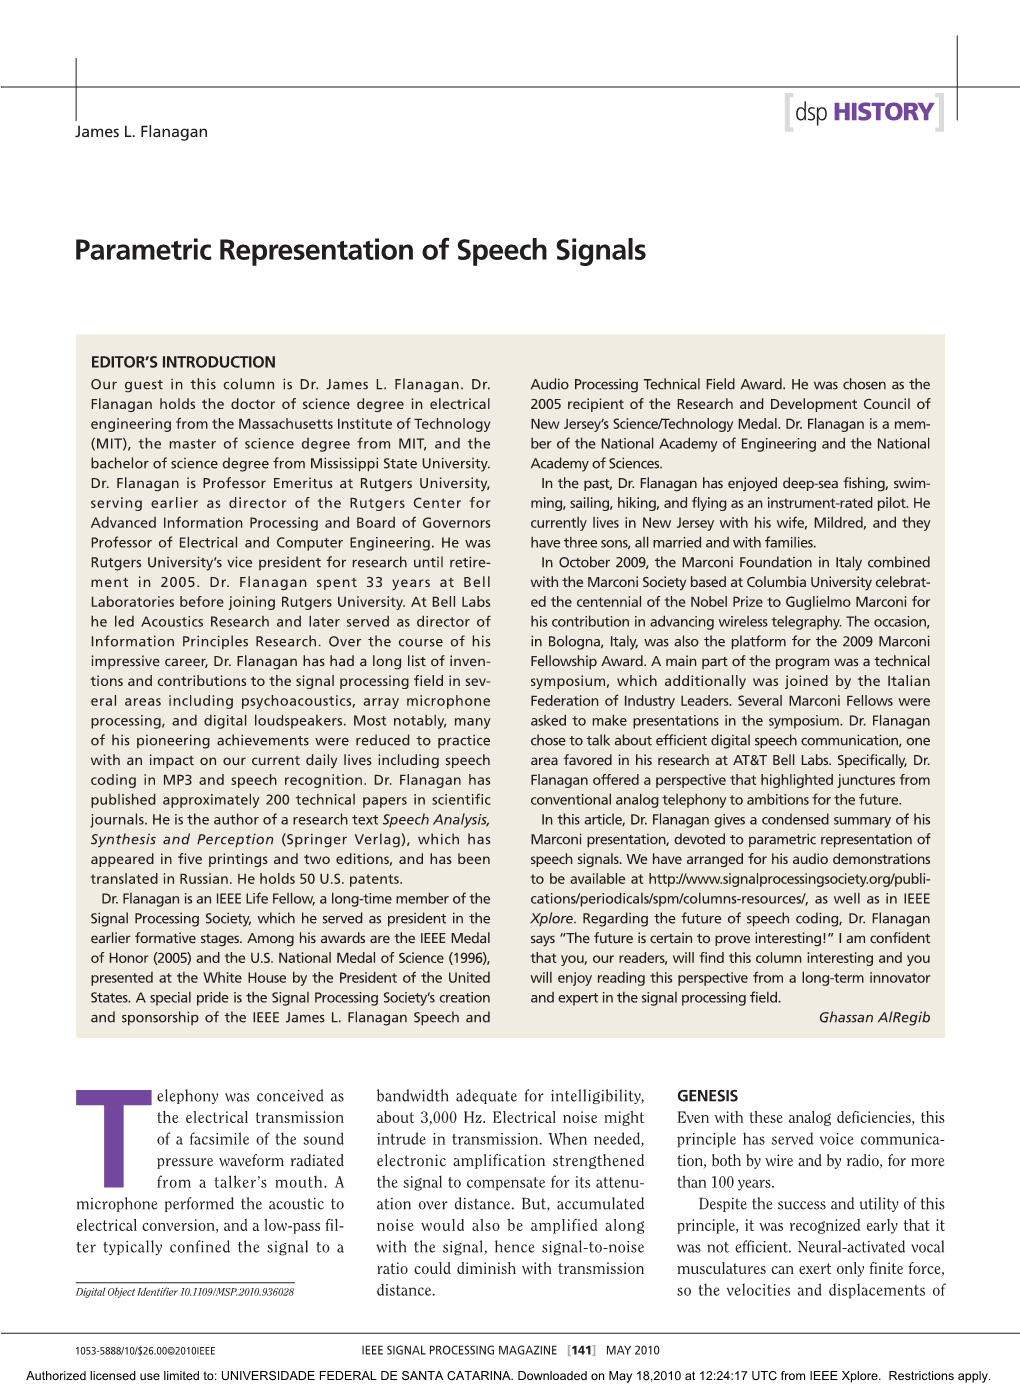 Parametric Representation of Speech Signals